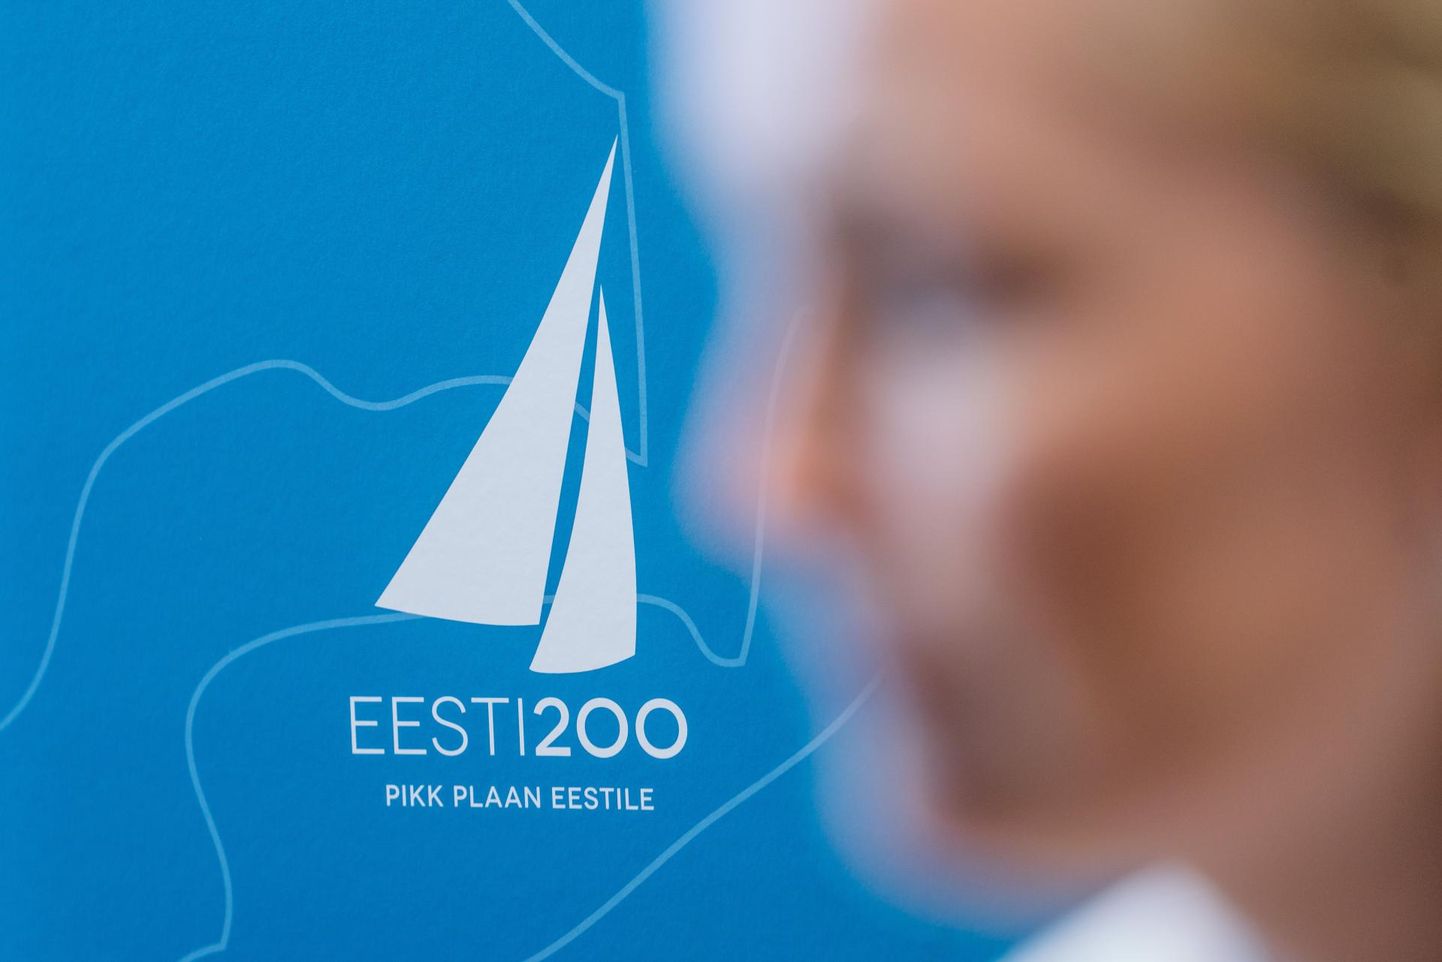 Eesti 200 logo.